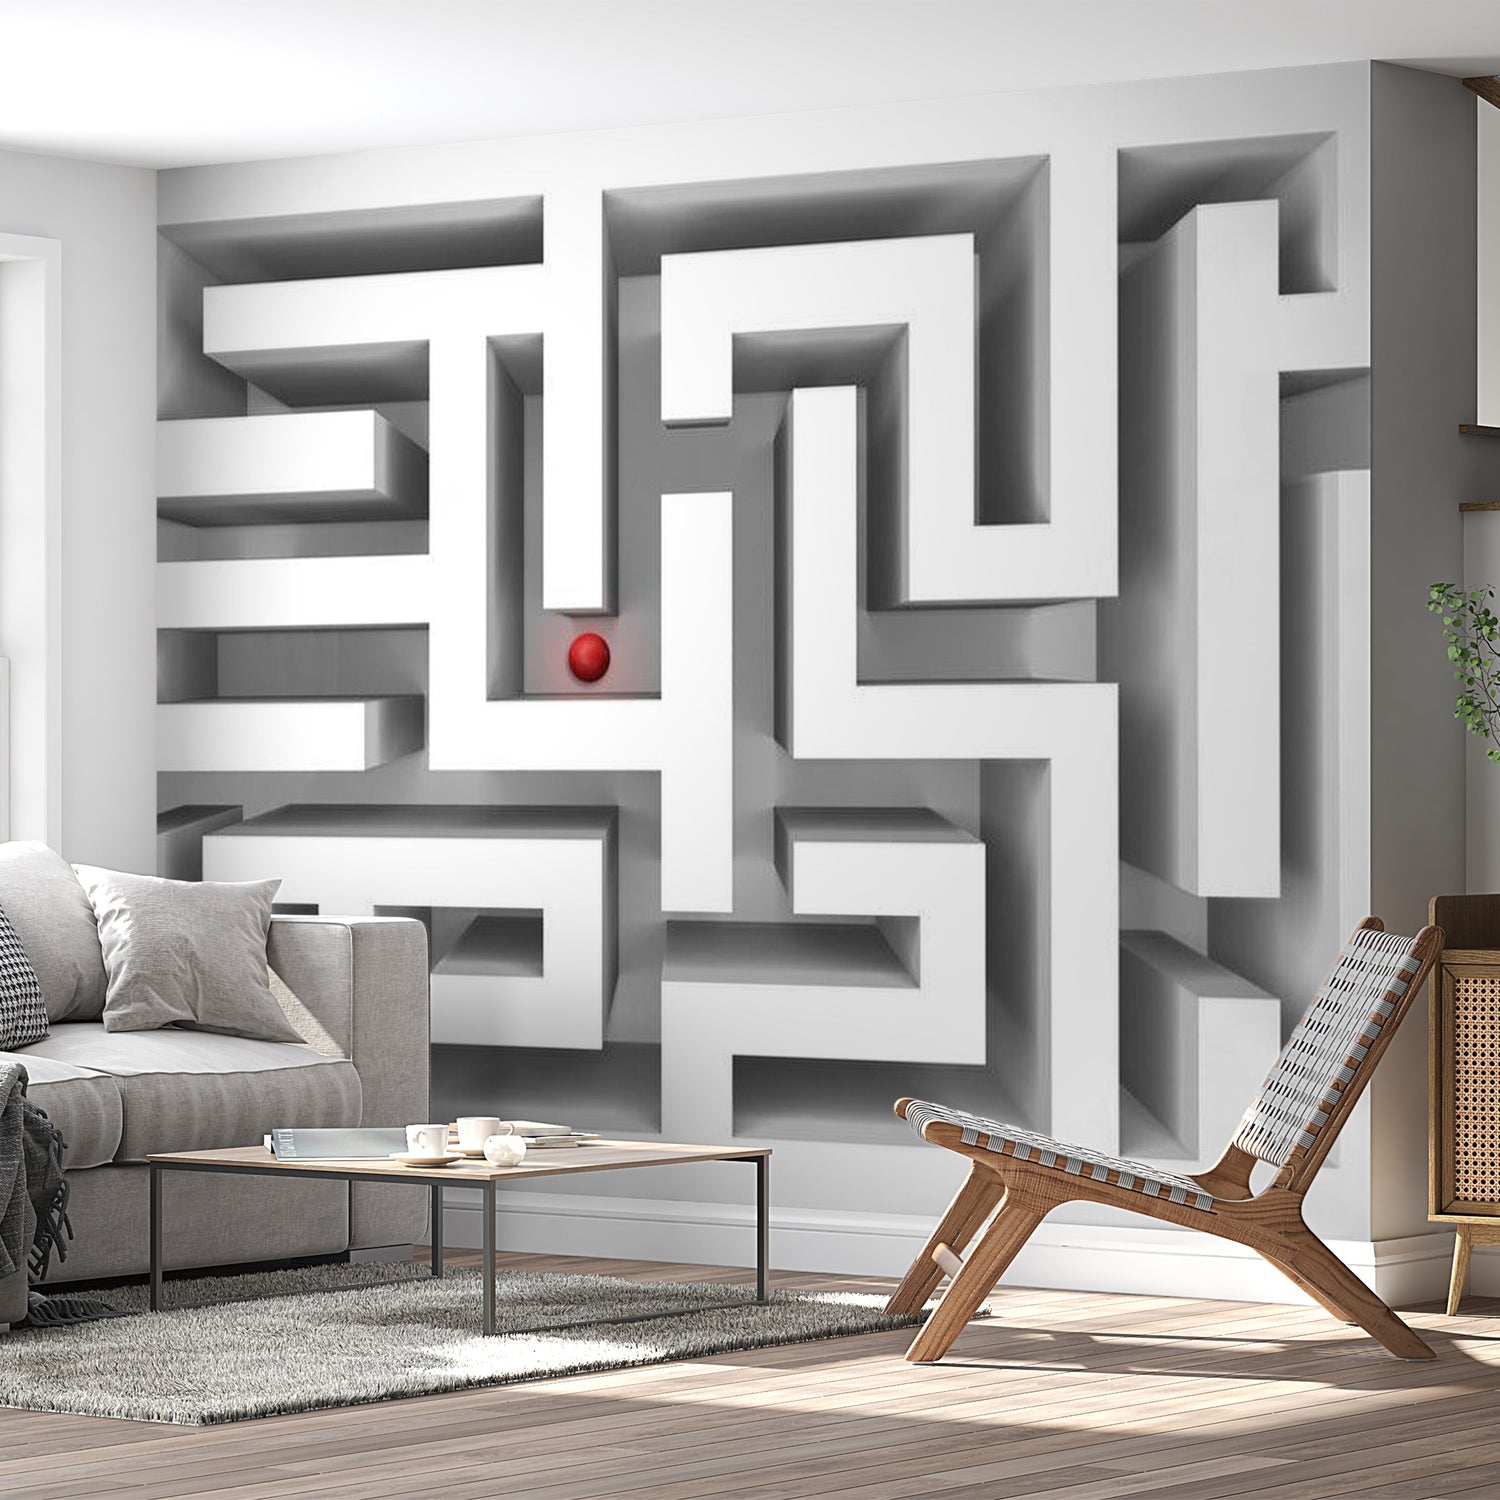 3D Illusion Wallpaper Wall Mural - Labyrinth